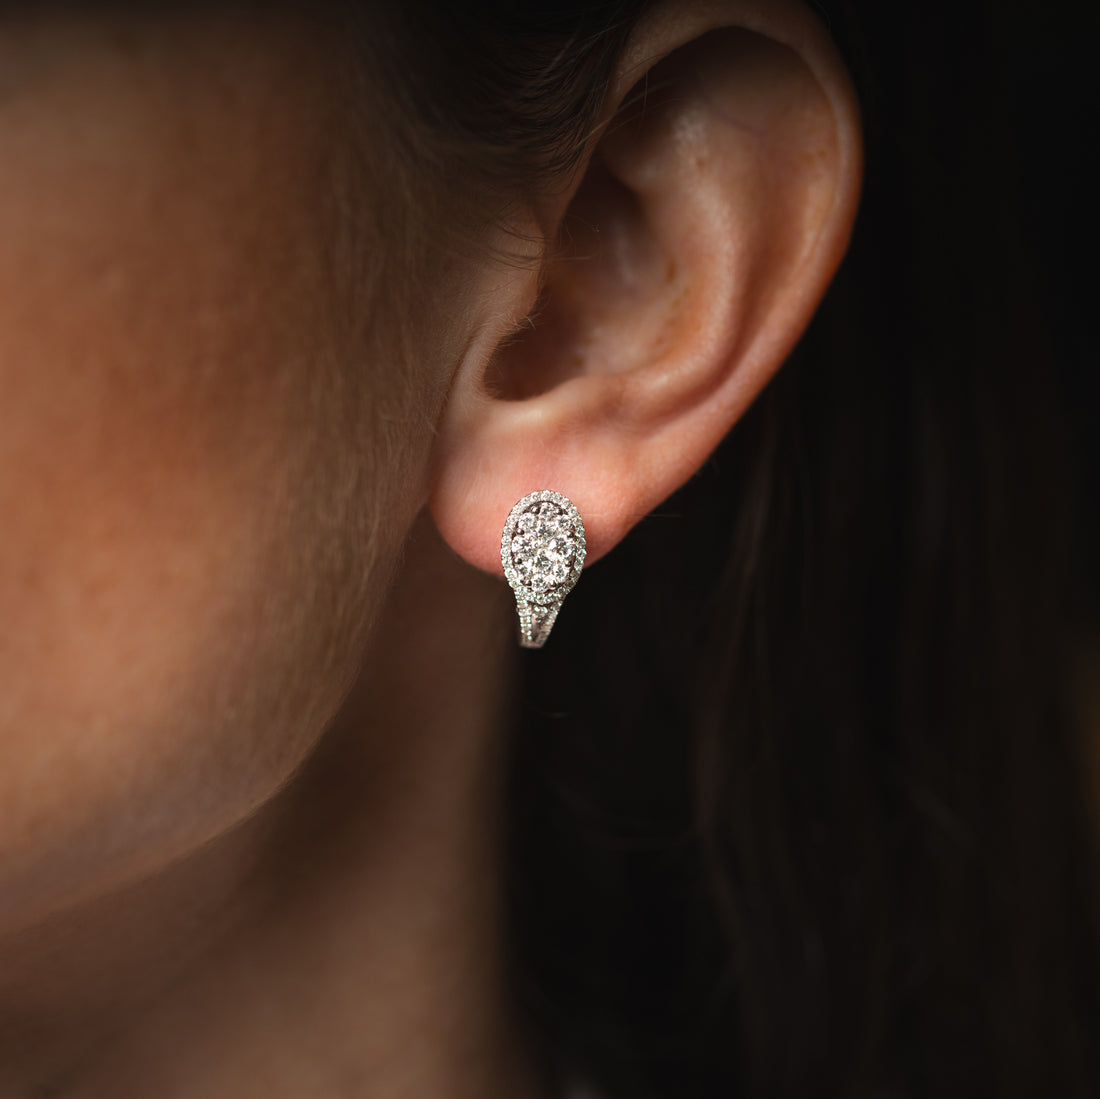 18CT White Gold Oval Diamond Halo Huggie Earrings (2cts) - Robert Anthony Jewellers, Edinburgh